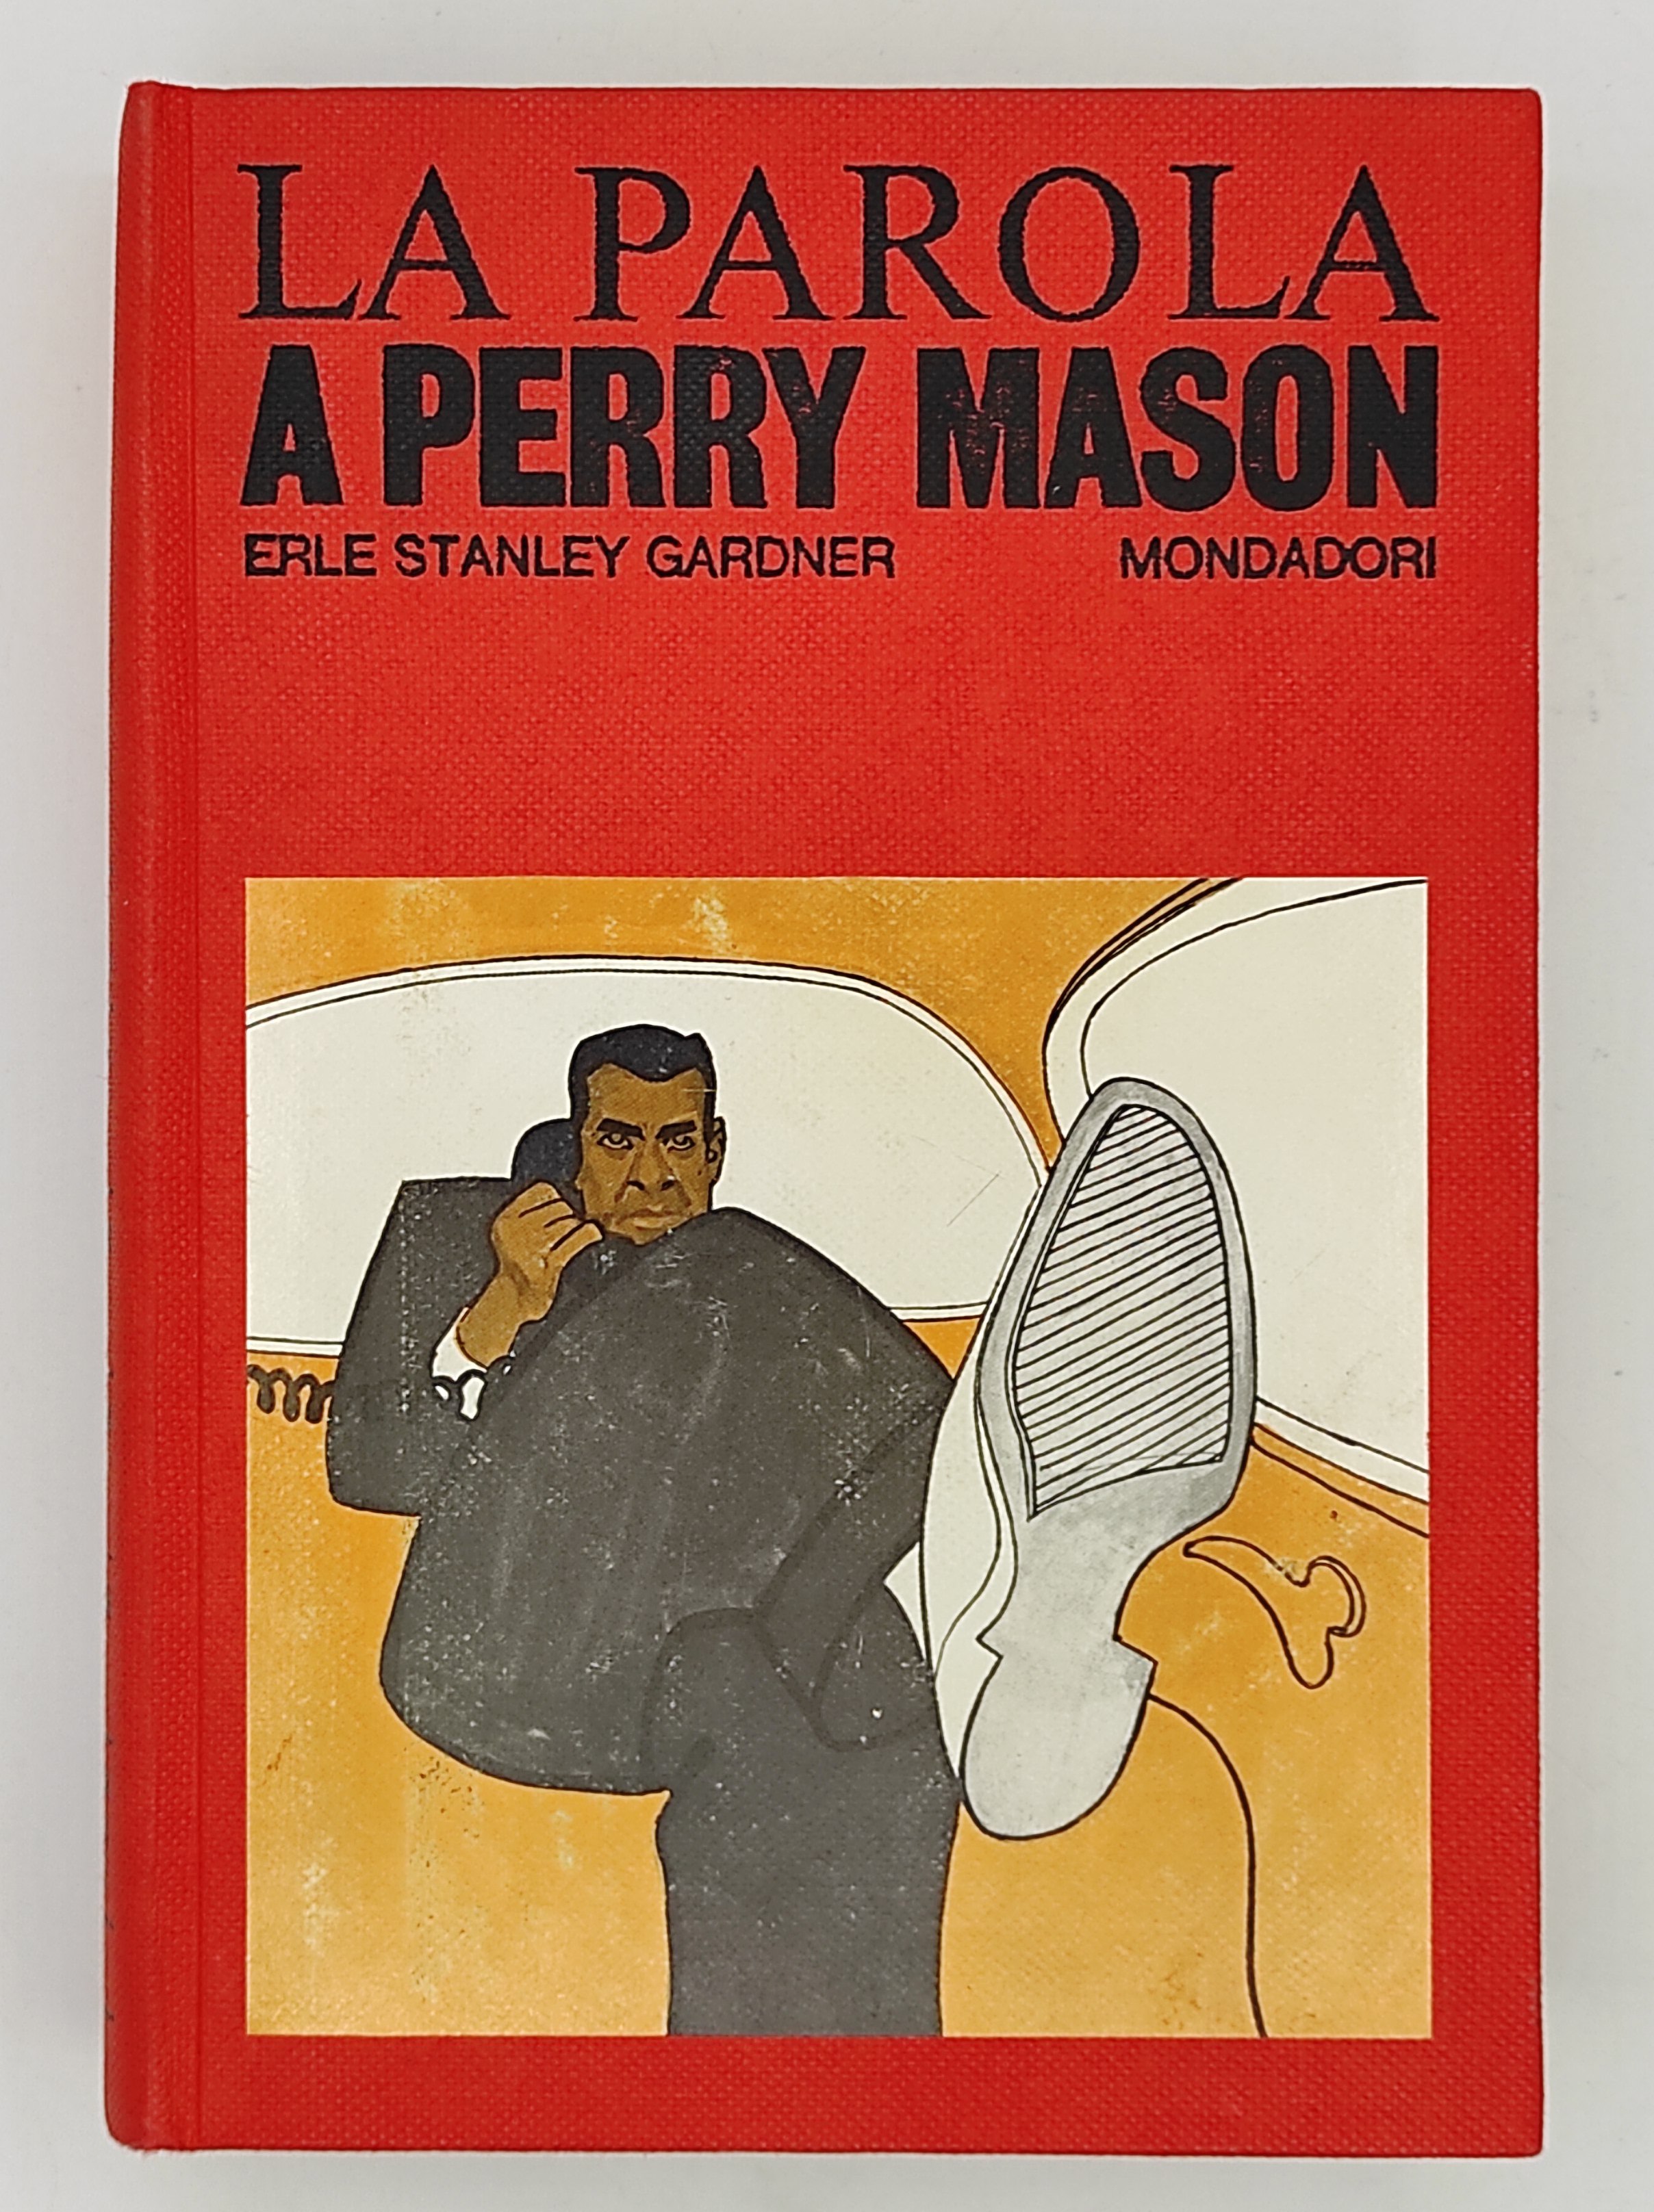 La parola a Perry Mason